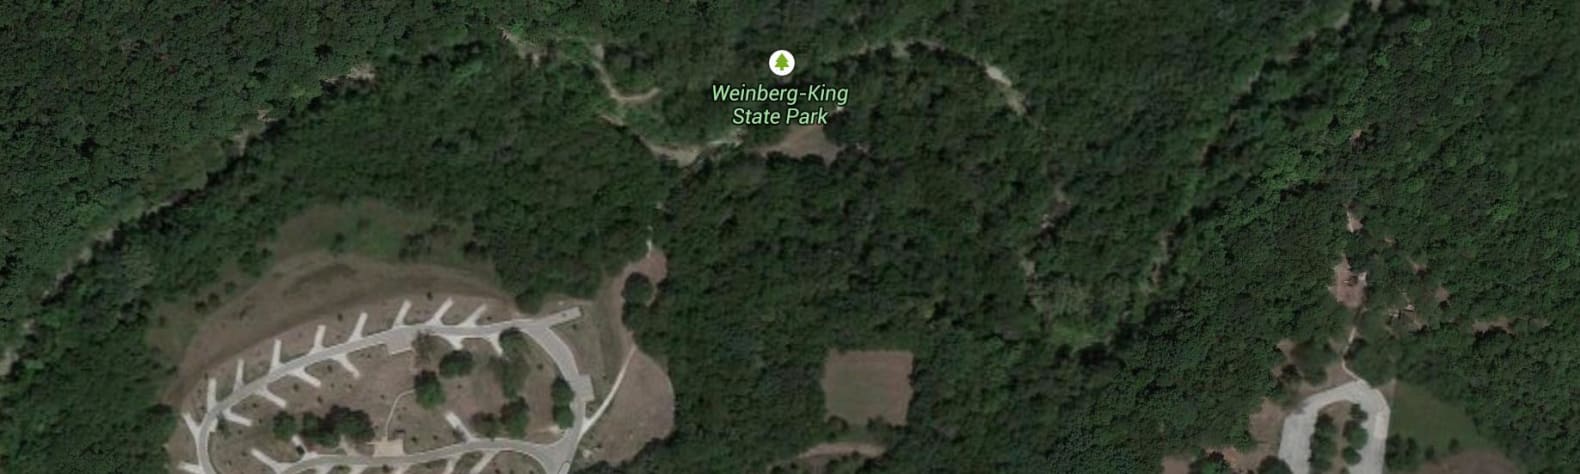 Weinberg-King State Fish & Wildlife Area